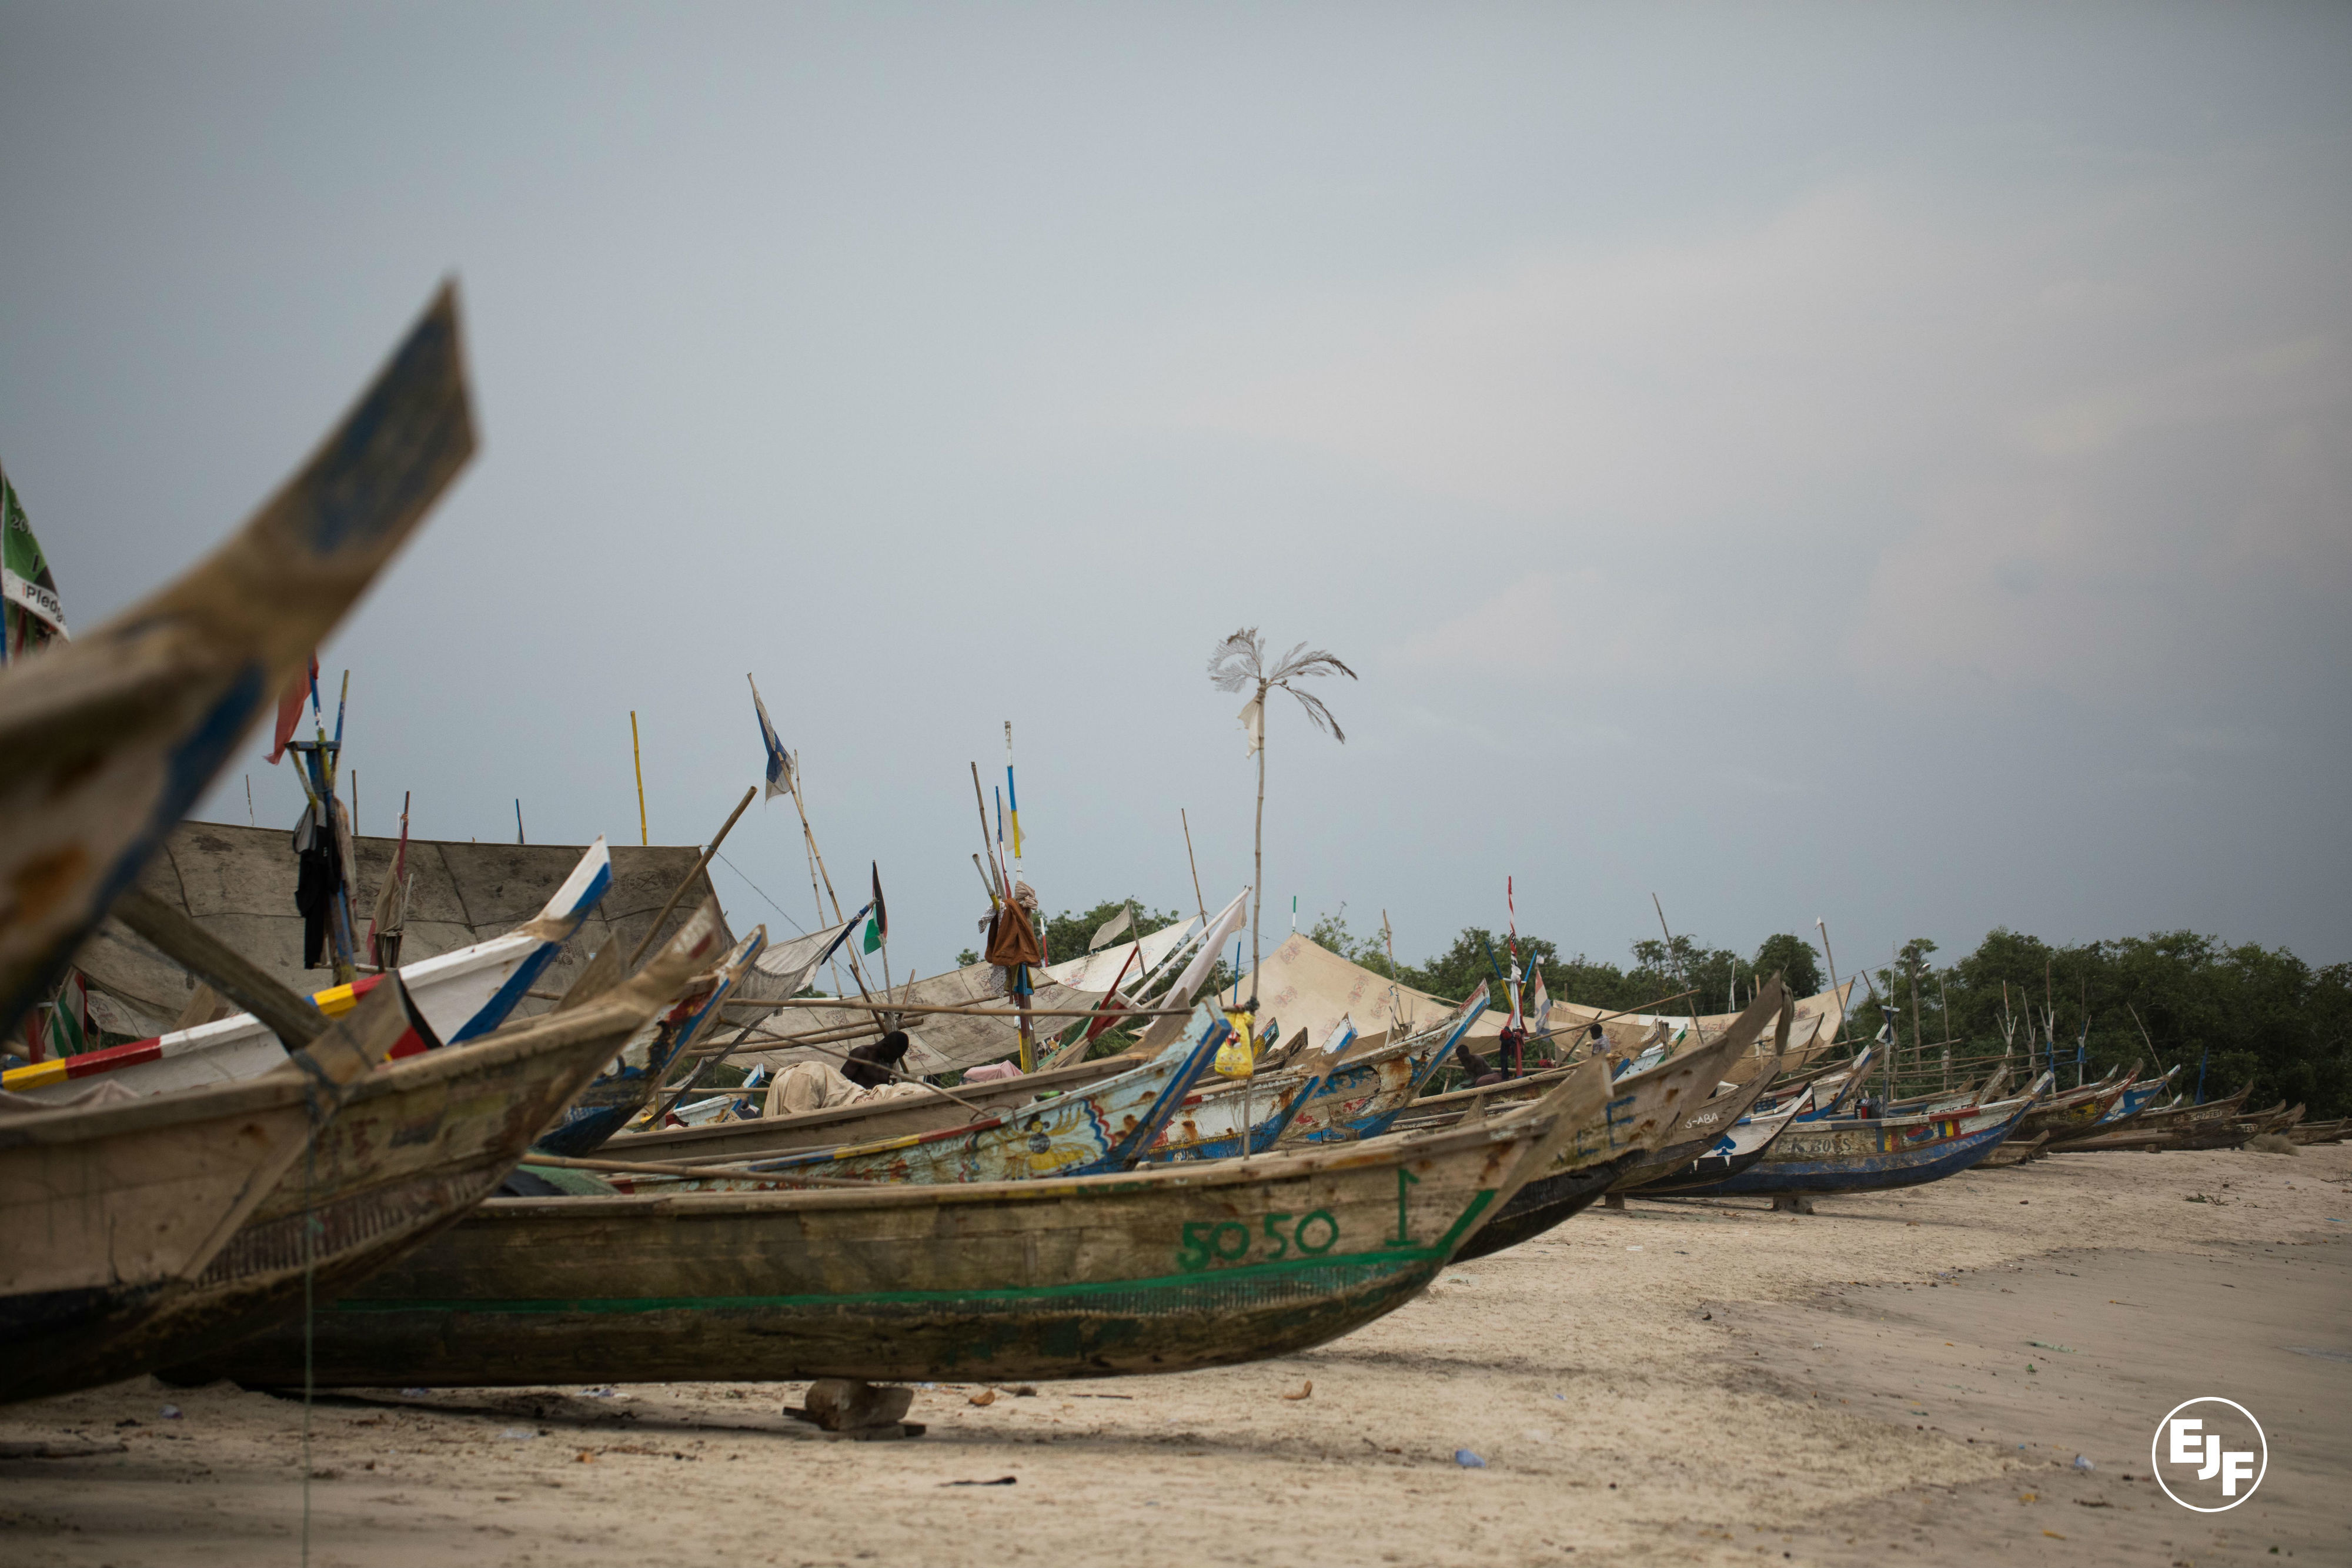 Ghana makes progress towards sustainable fisheries through fair tenure rights